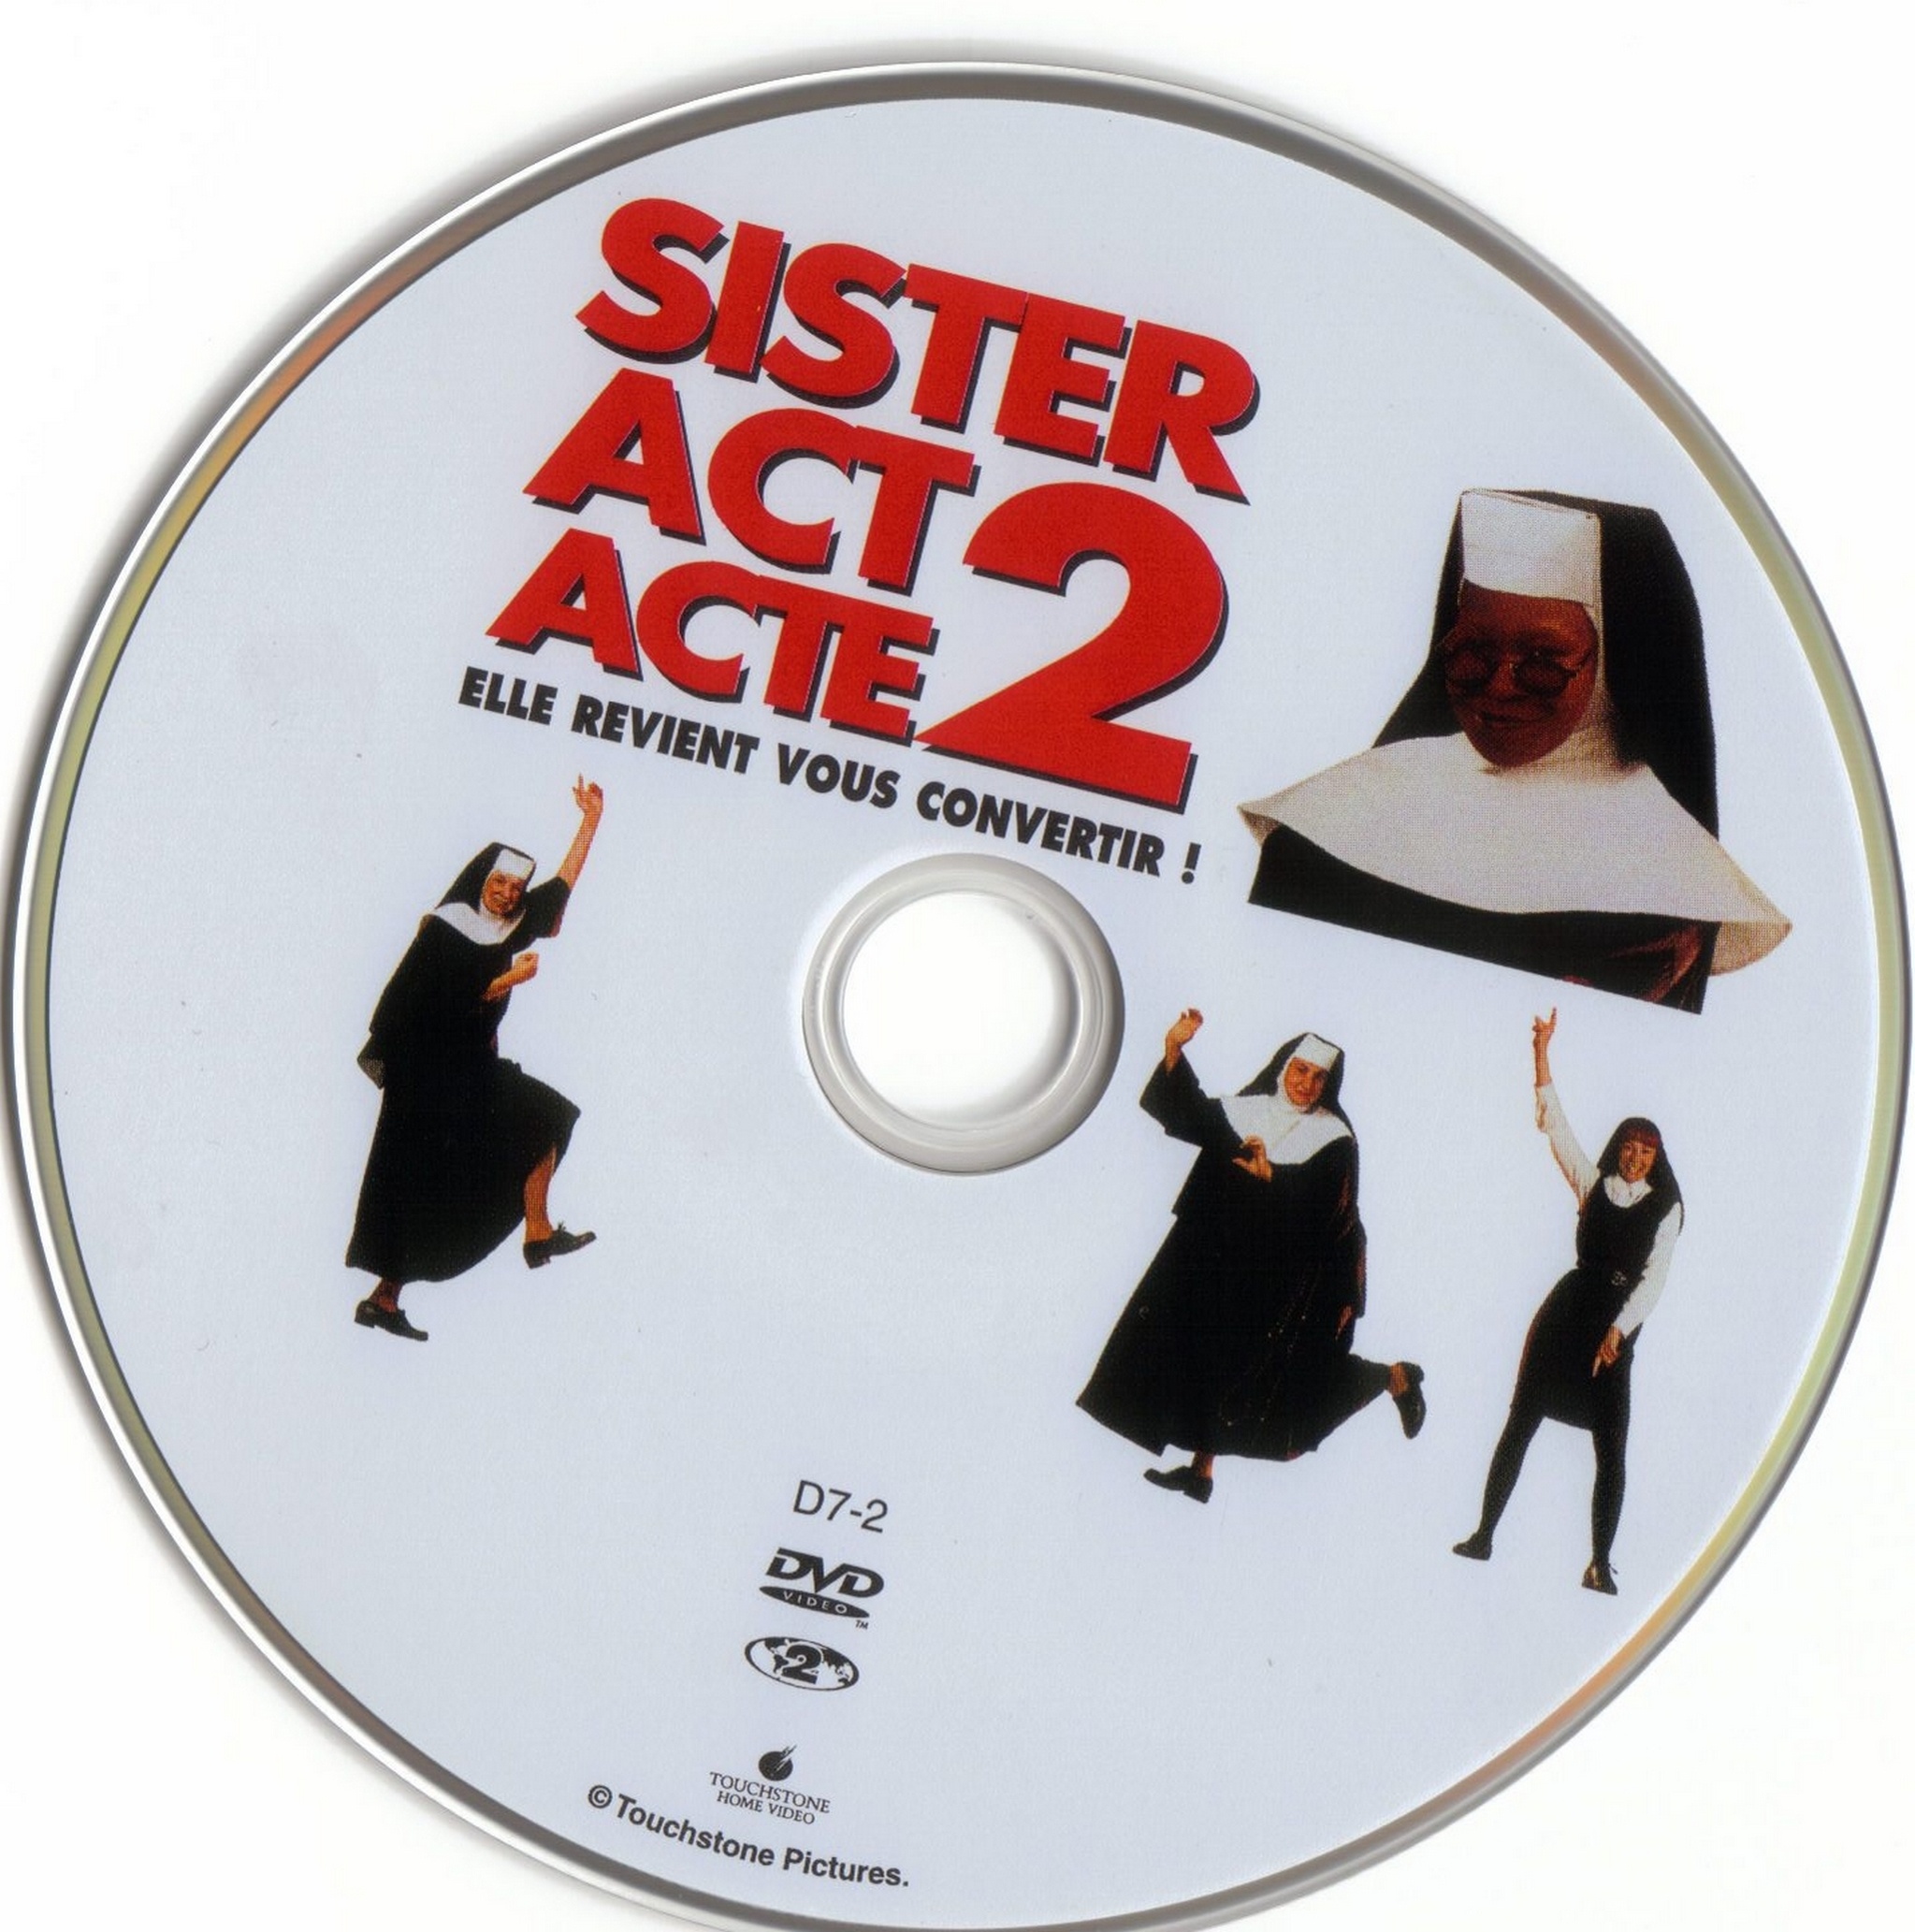 Sister act 2